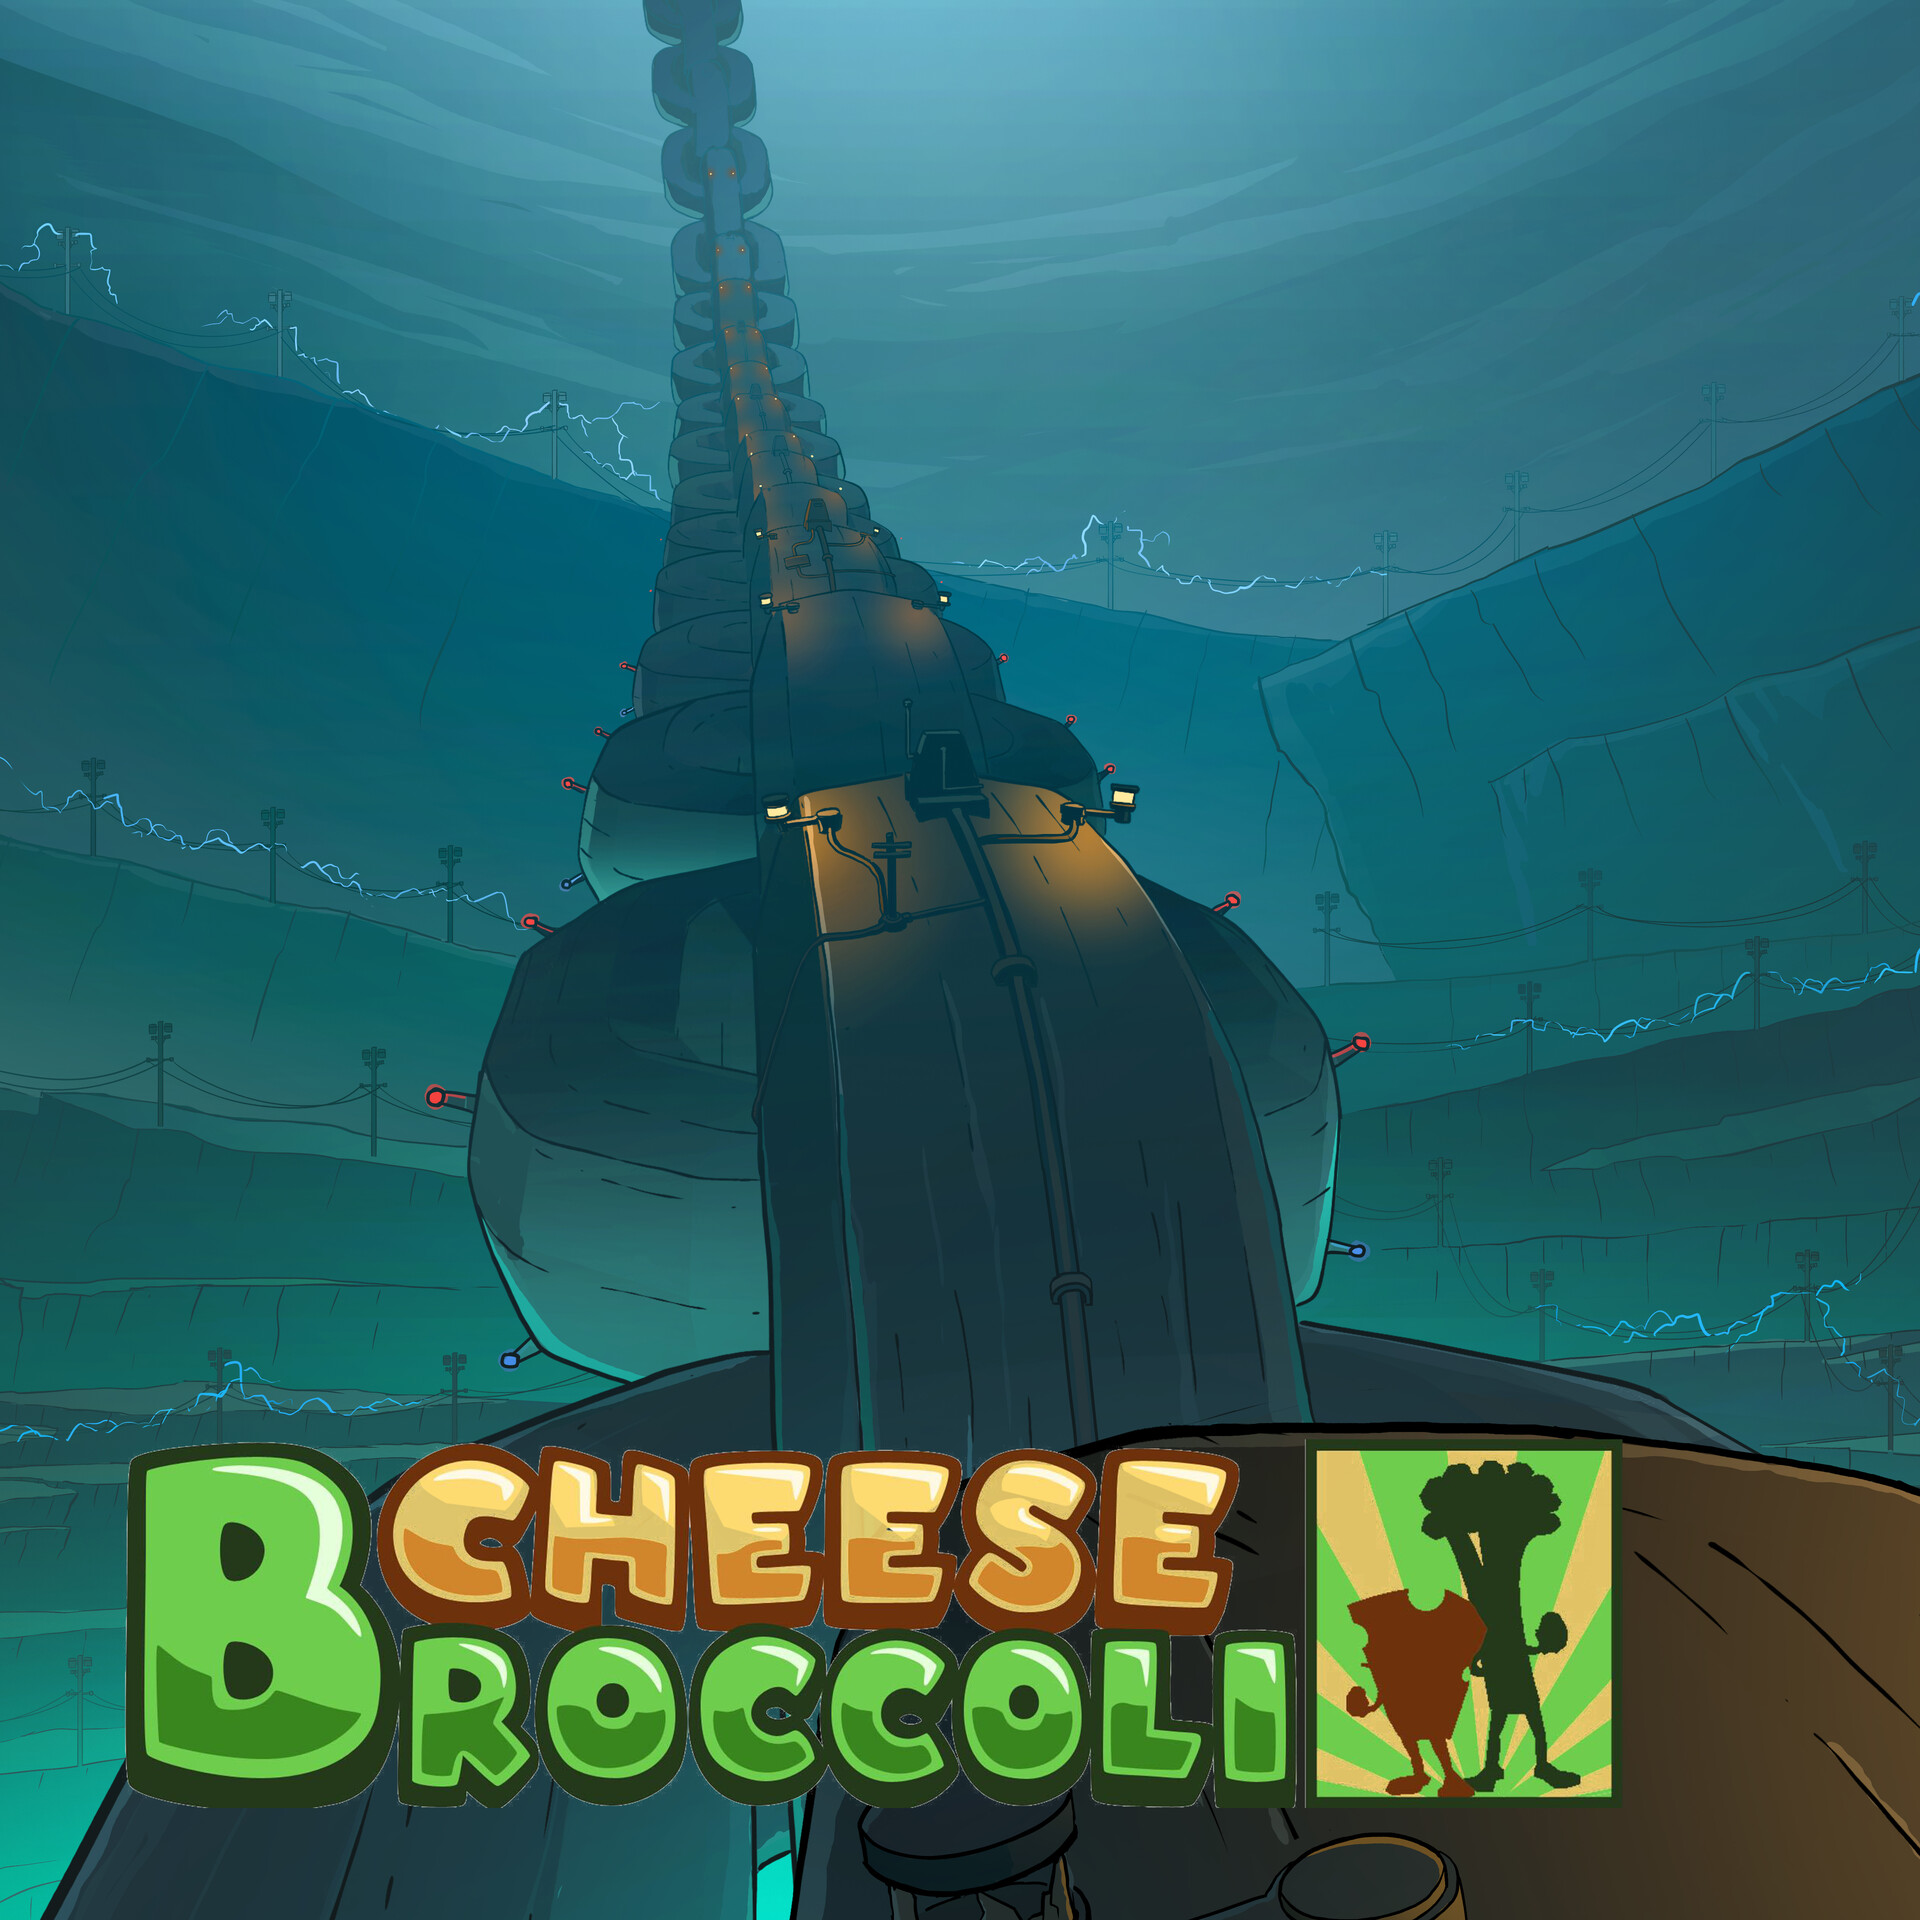 Cheese Broccoli Studio - Climbing the Chain